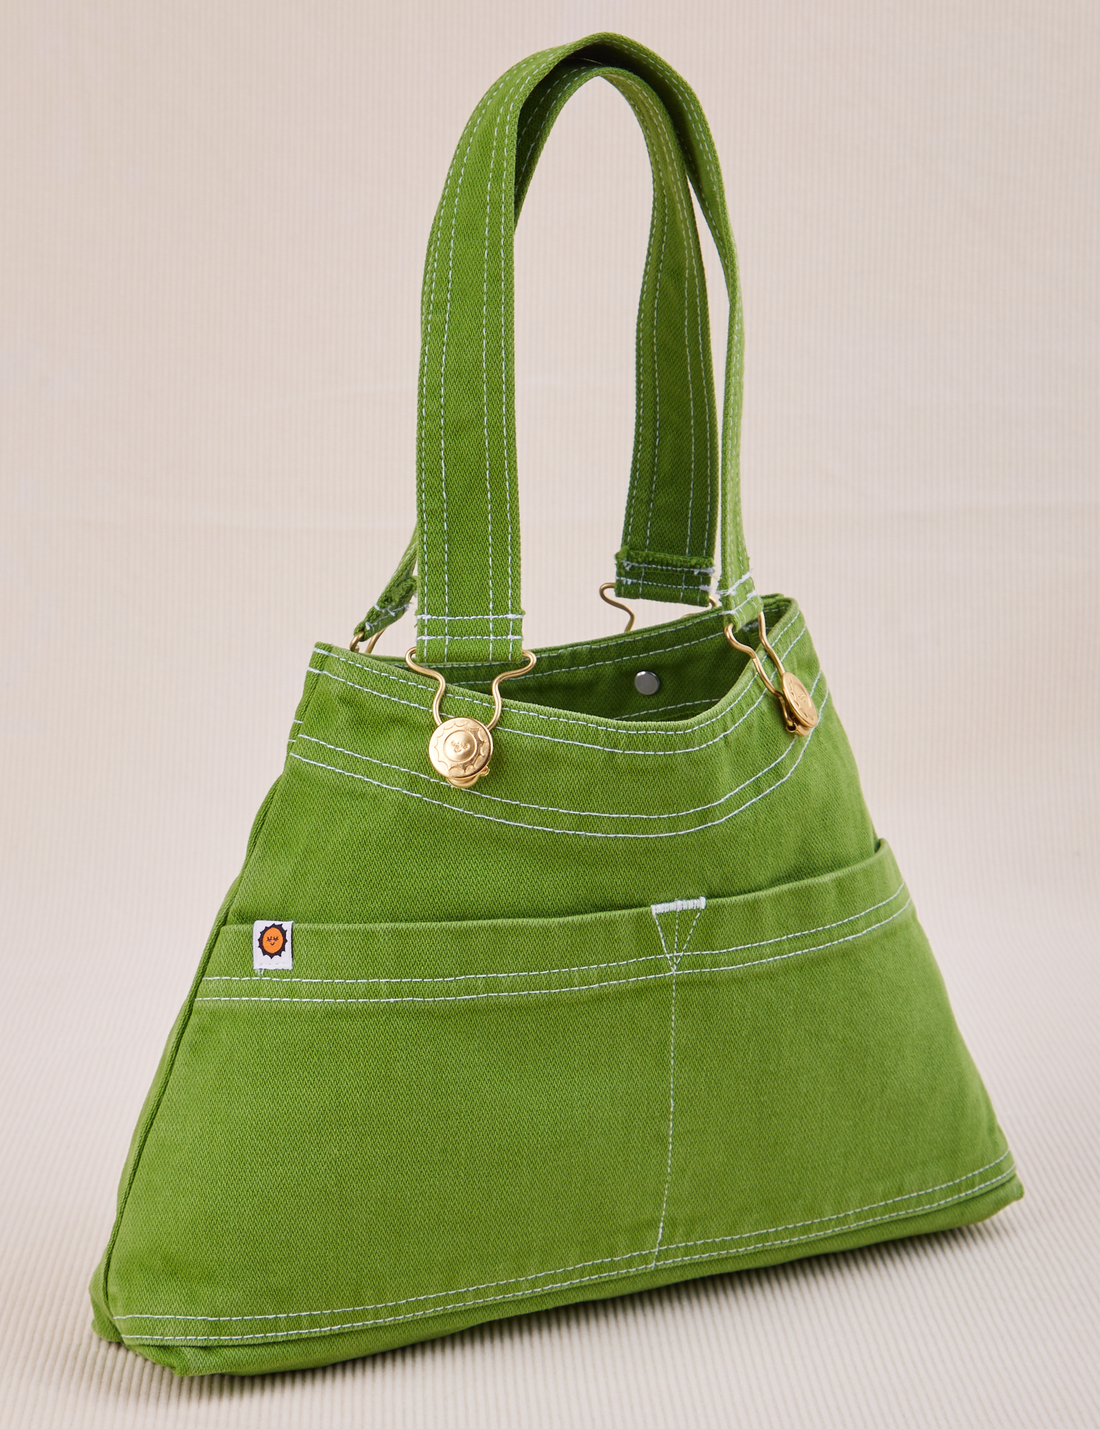 Overall Handbag in Bright Olive